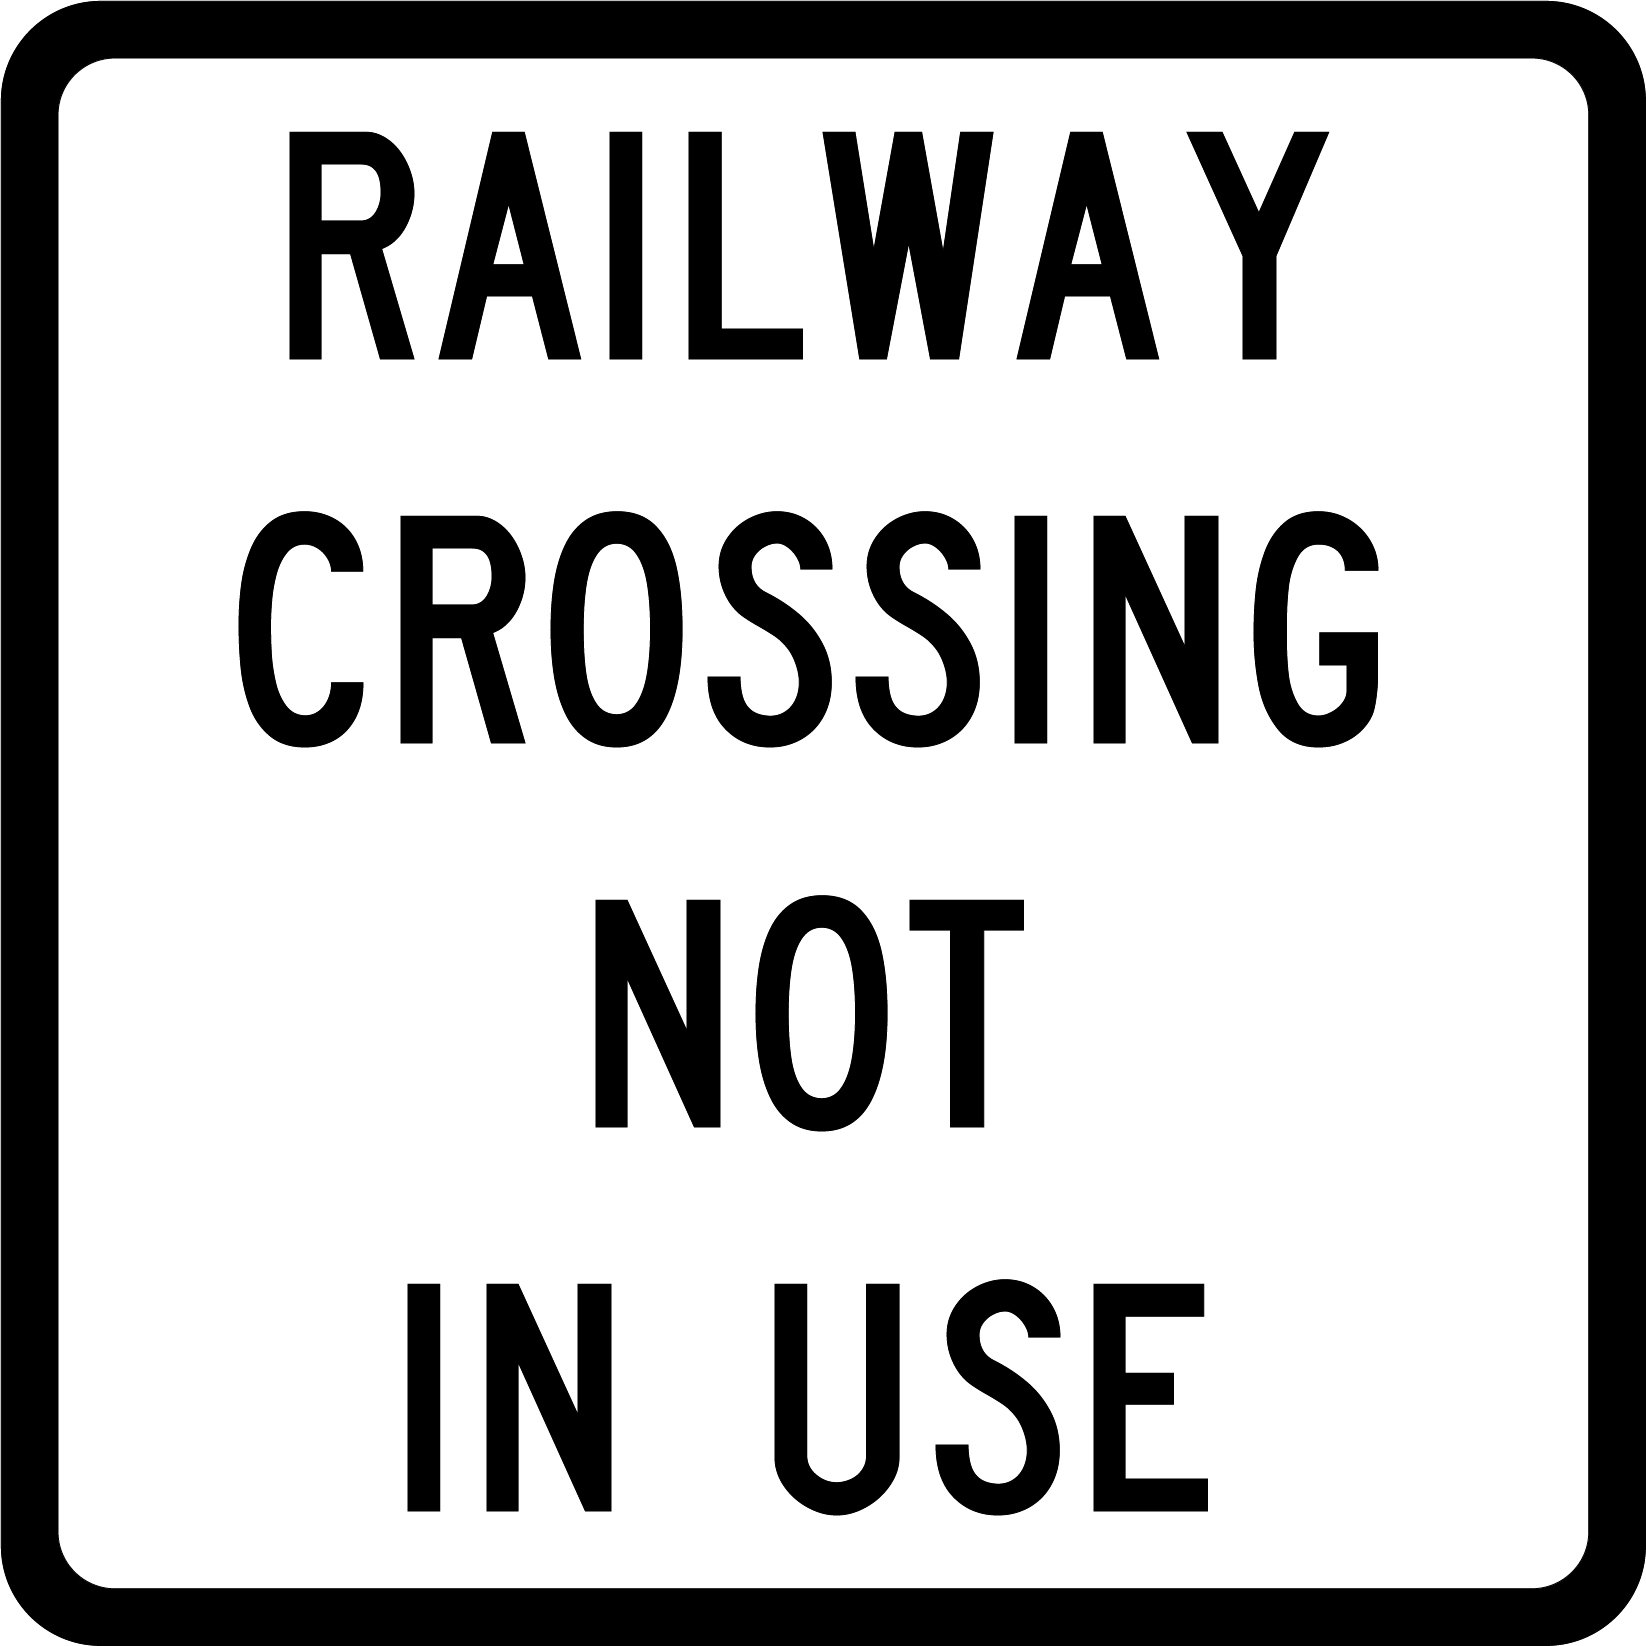 RAILWAY CROSSING NOT IN USE